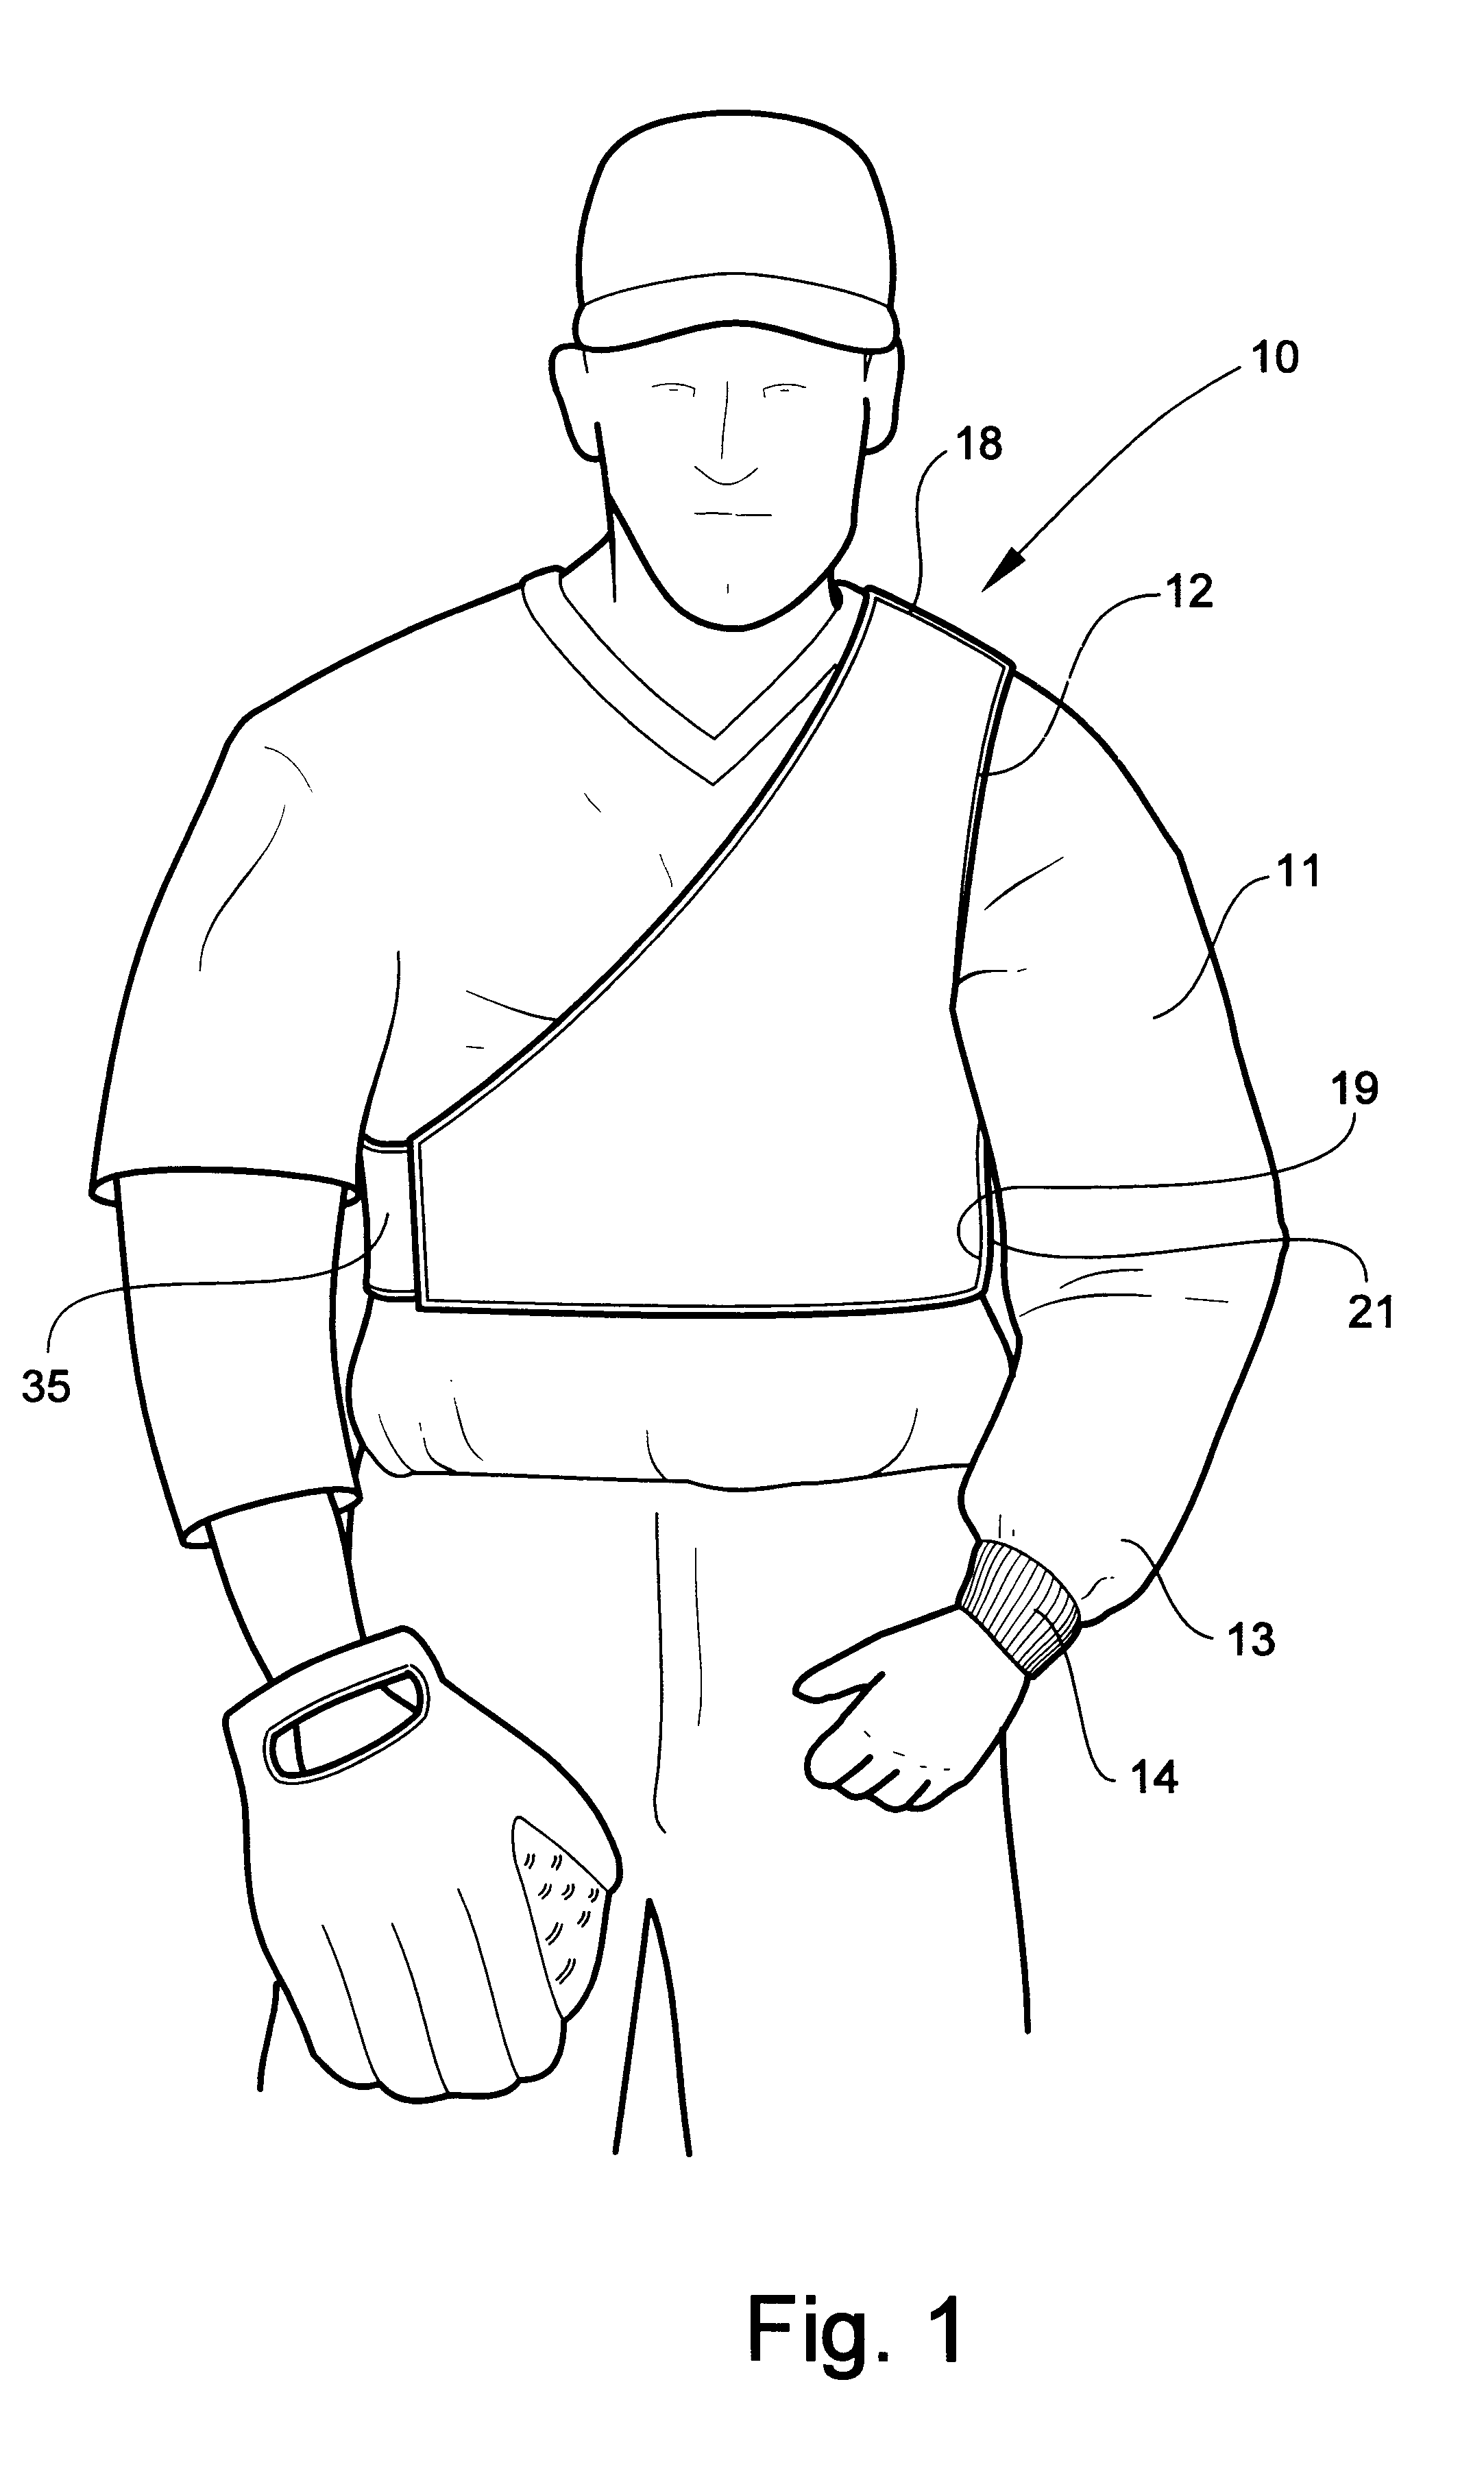 Warm-up garment with torso wrap